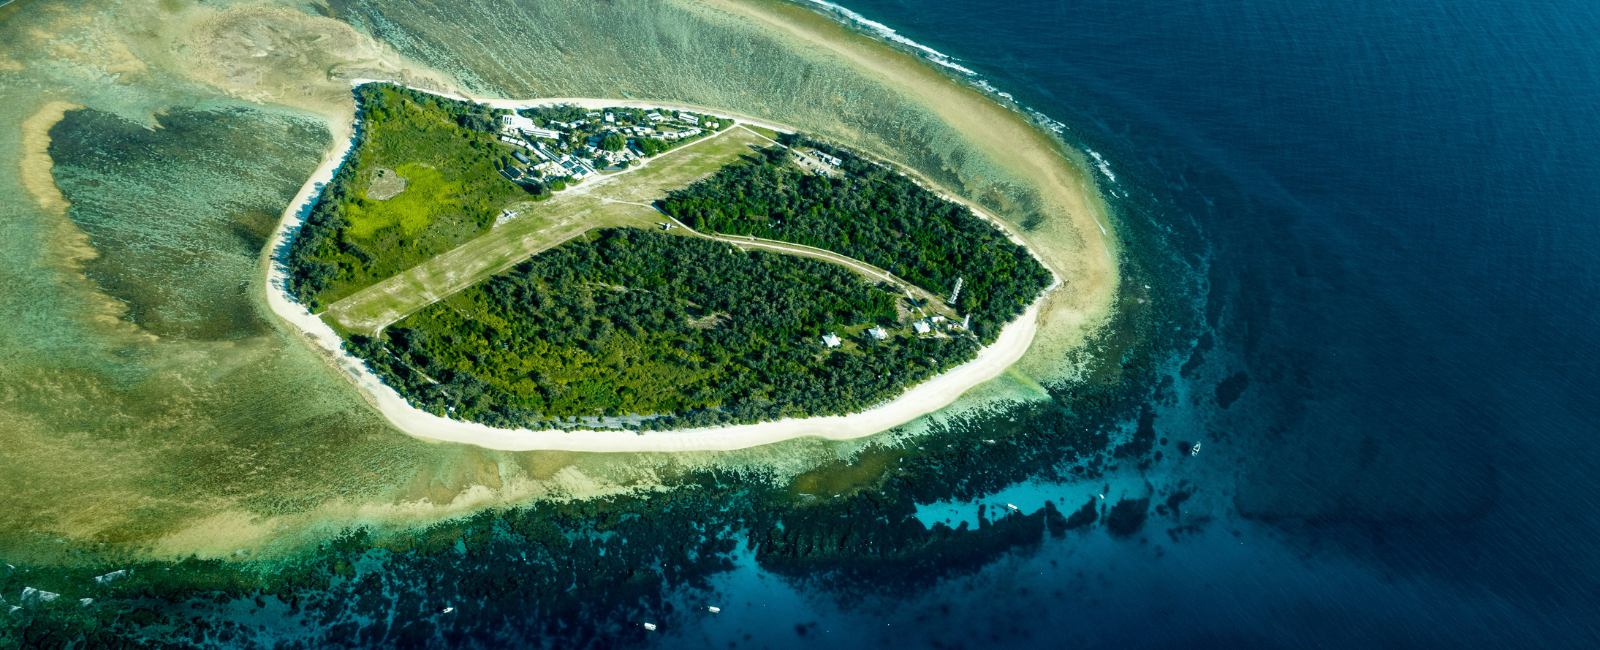 Lady Elliot Island and surrounding ocean reef